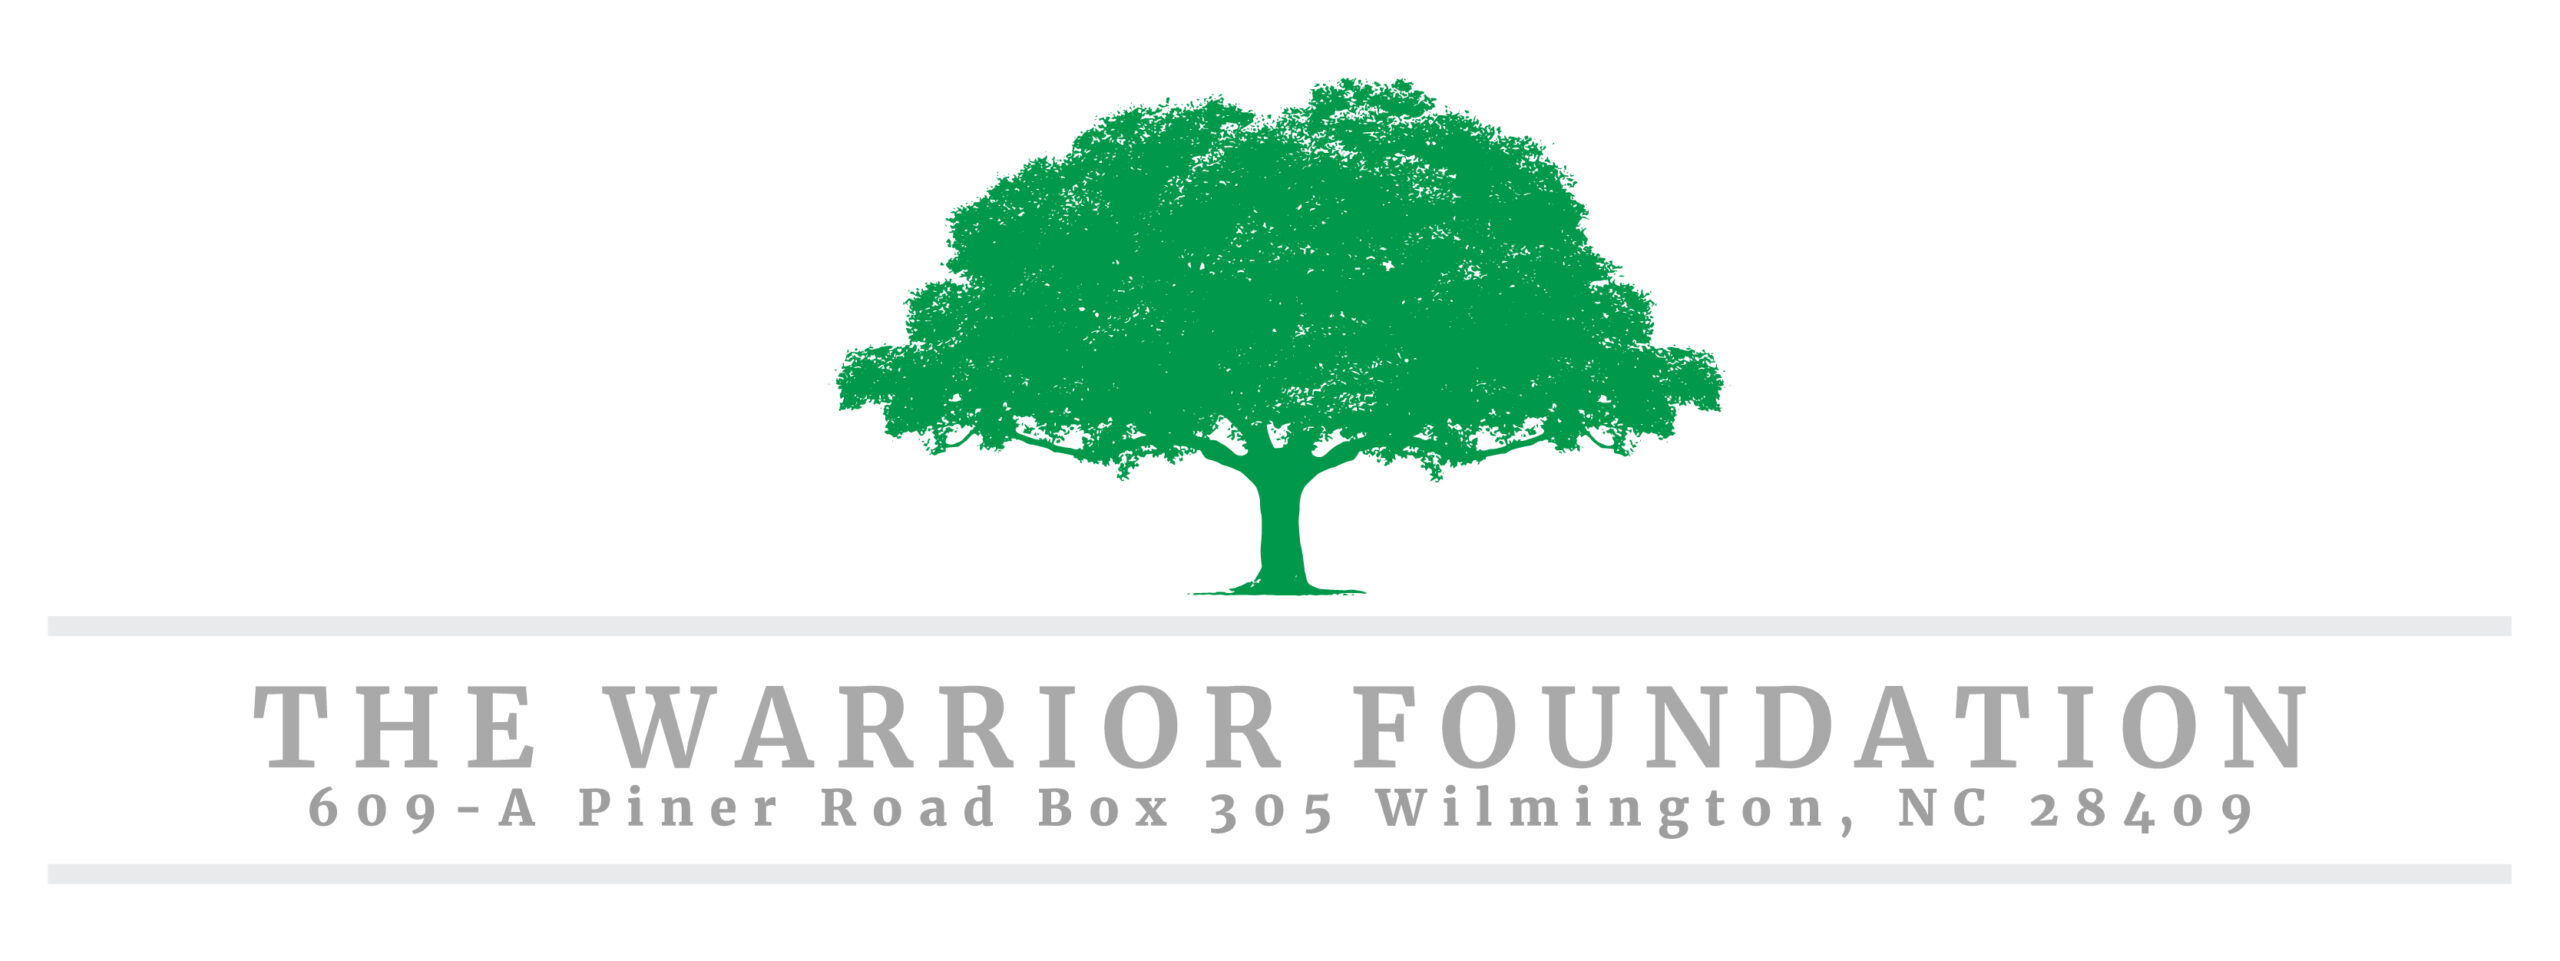 MGCS The Warrior Foundation logo idea 1-01